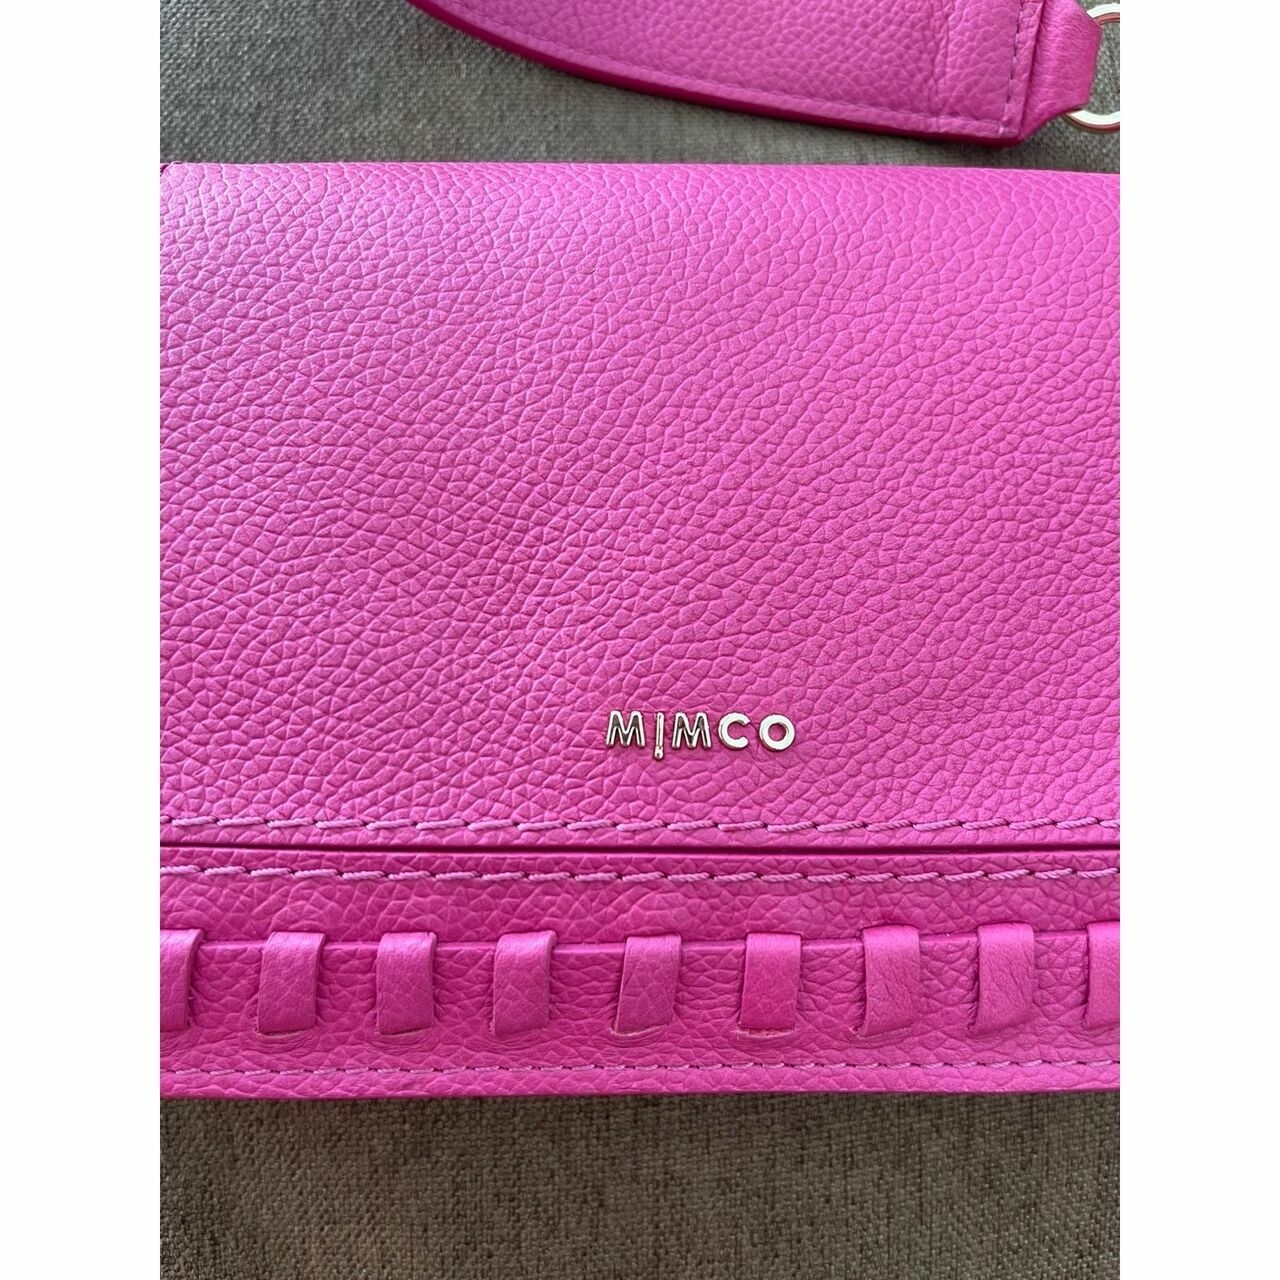 Mimco Pink Sling Bag